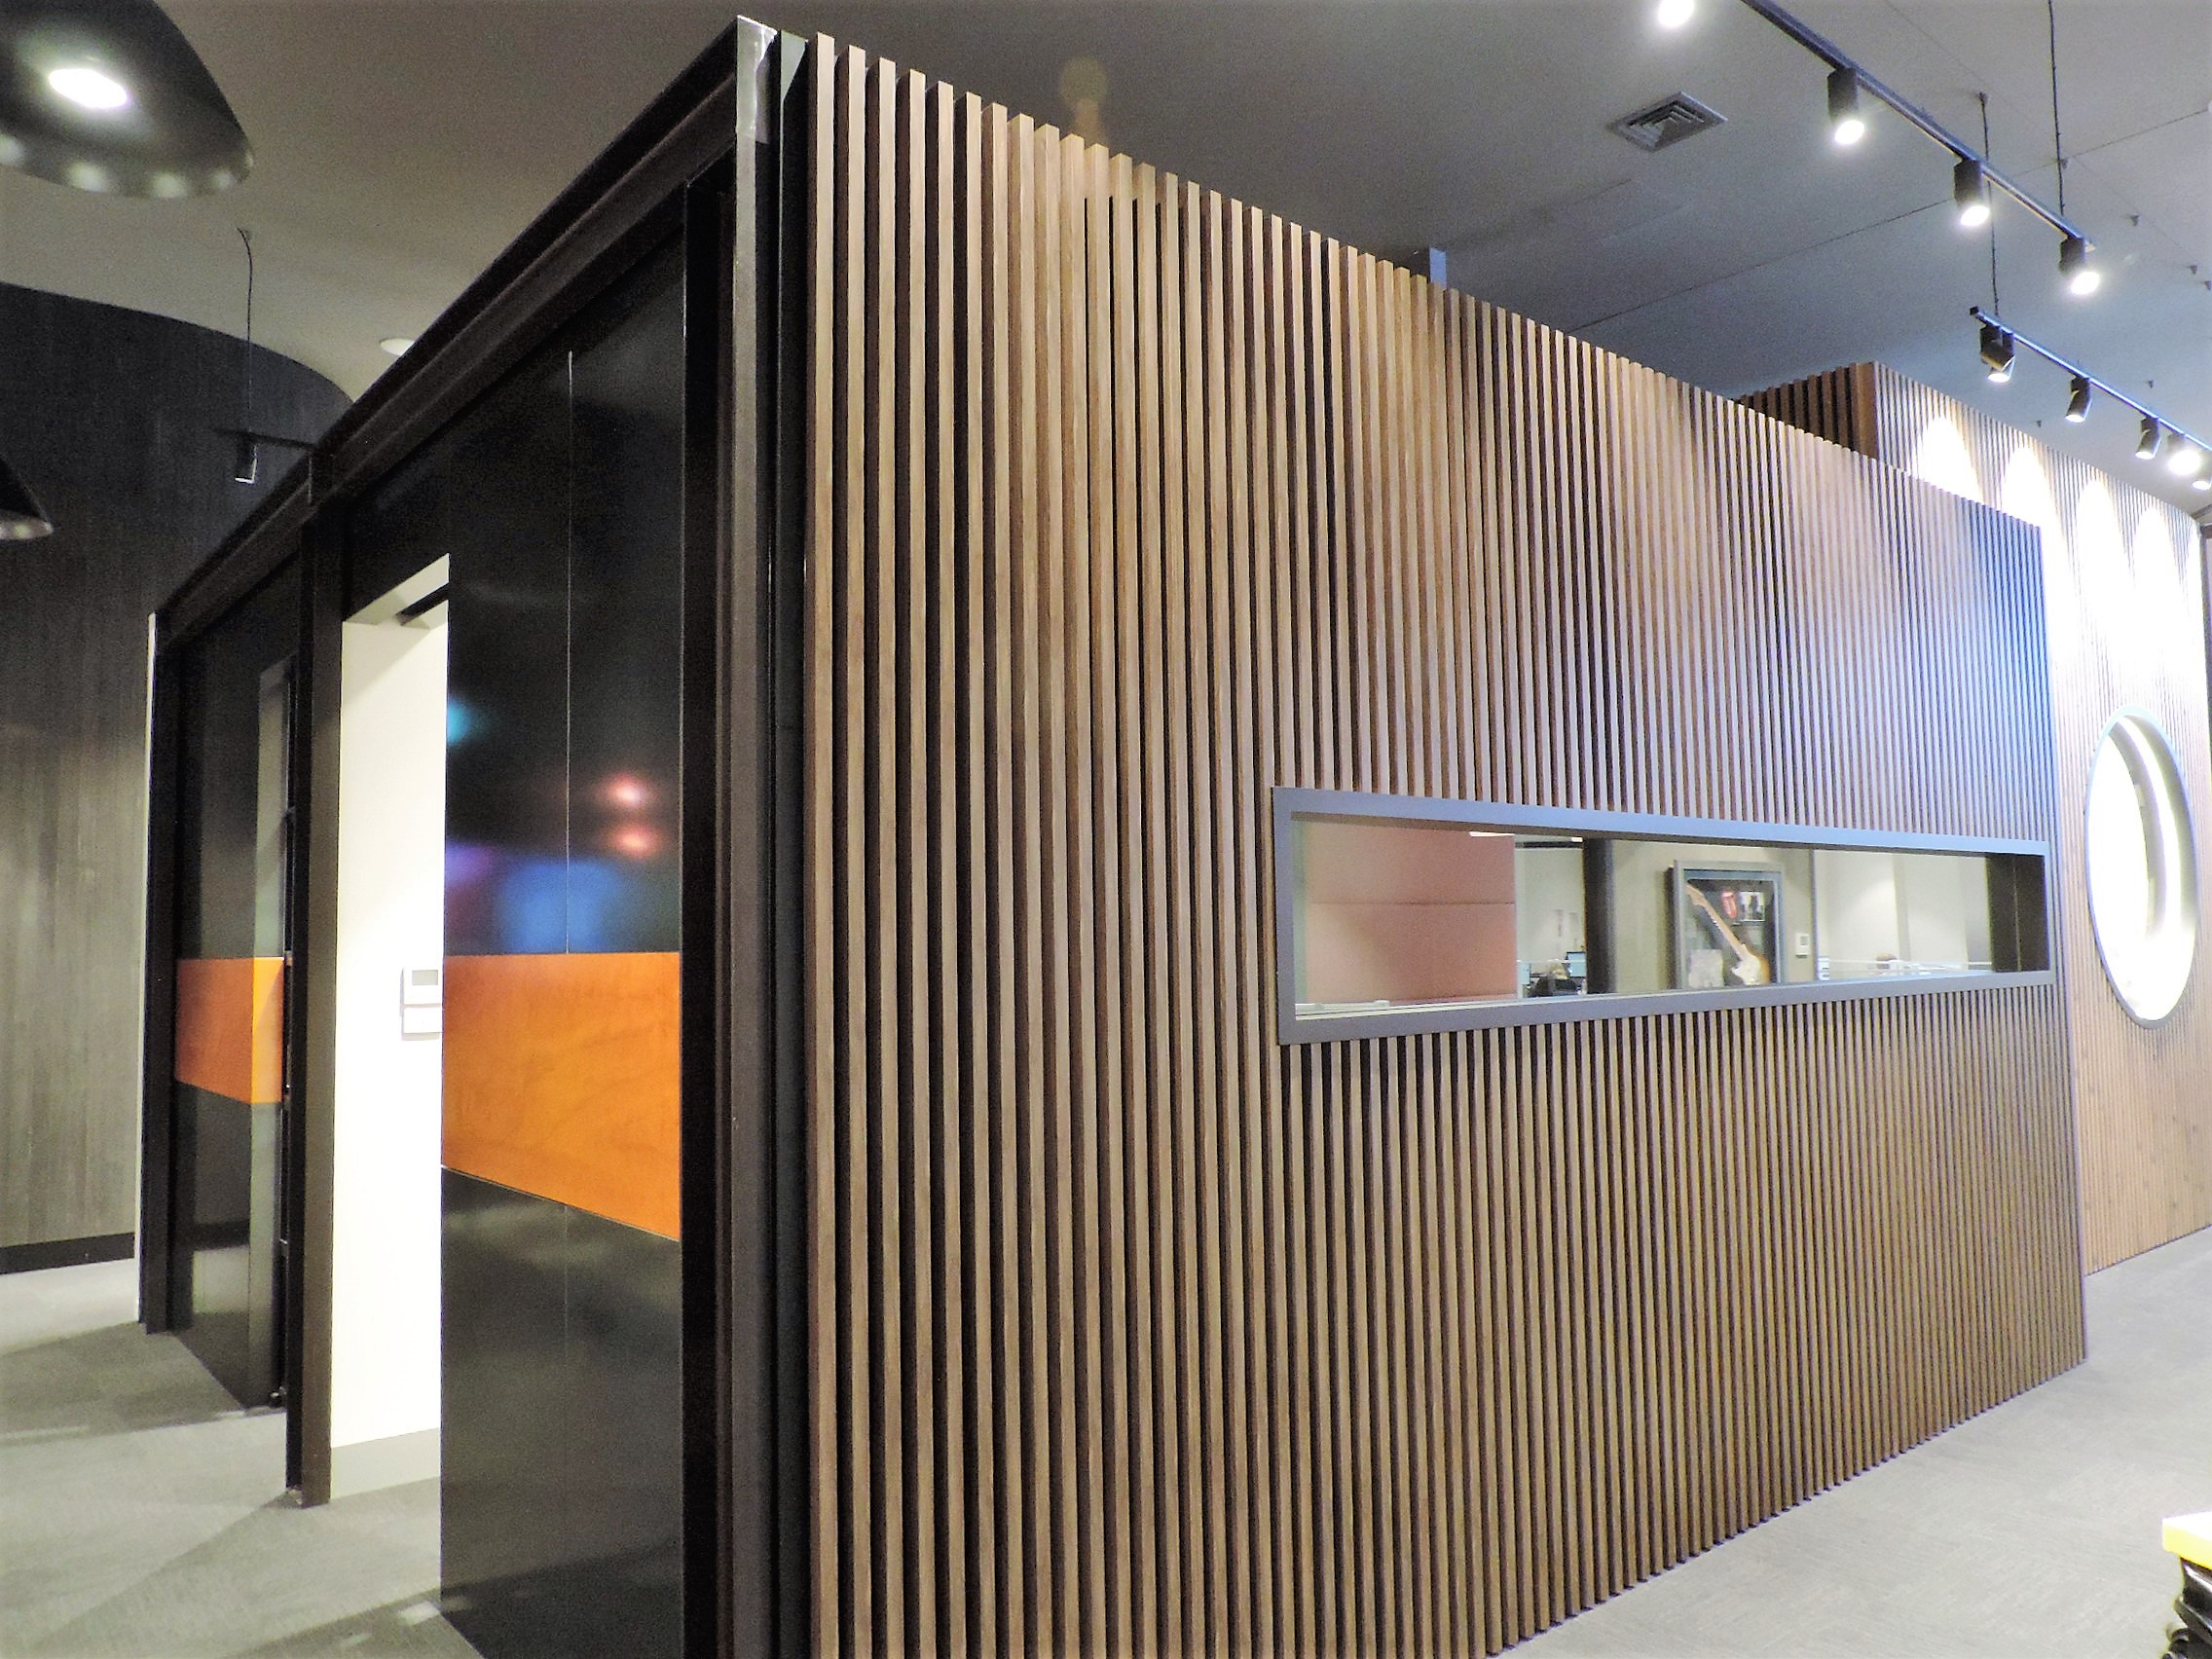  Boardroom Fitout - Richmond VIC Ever Art Wood® battens - Koshi 30x50mm standard hollow section in Buraun Eboni 